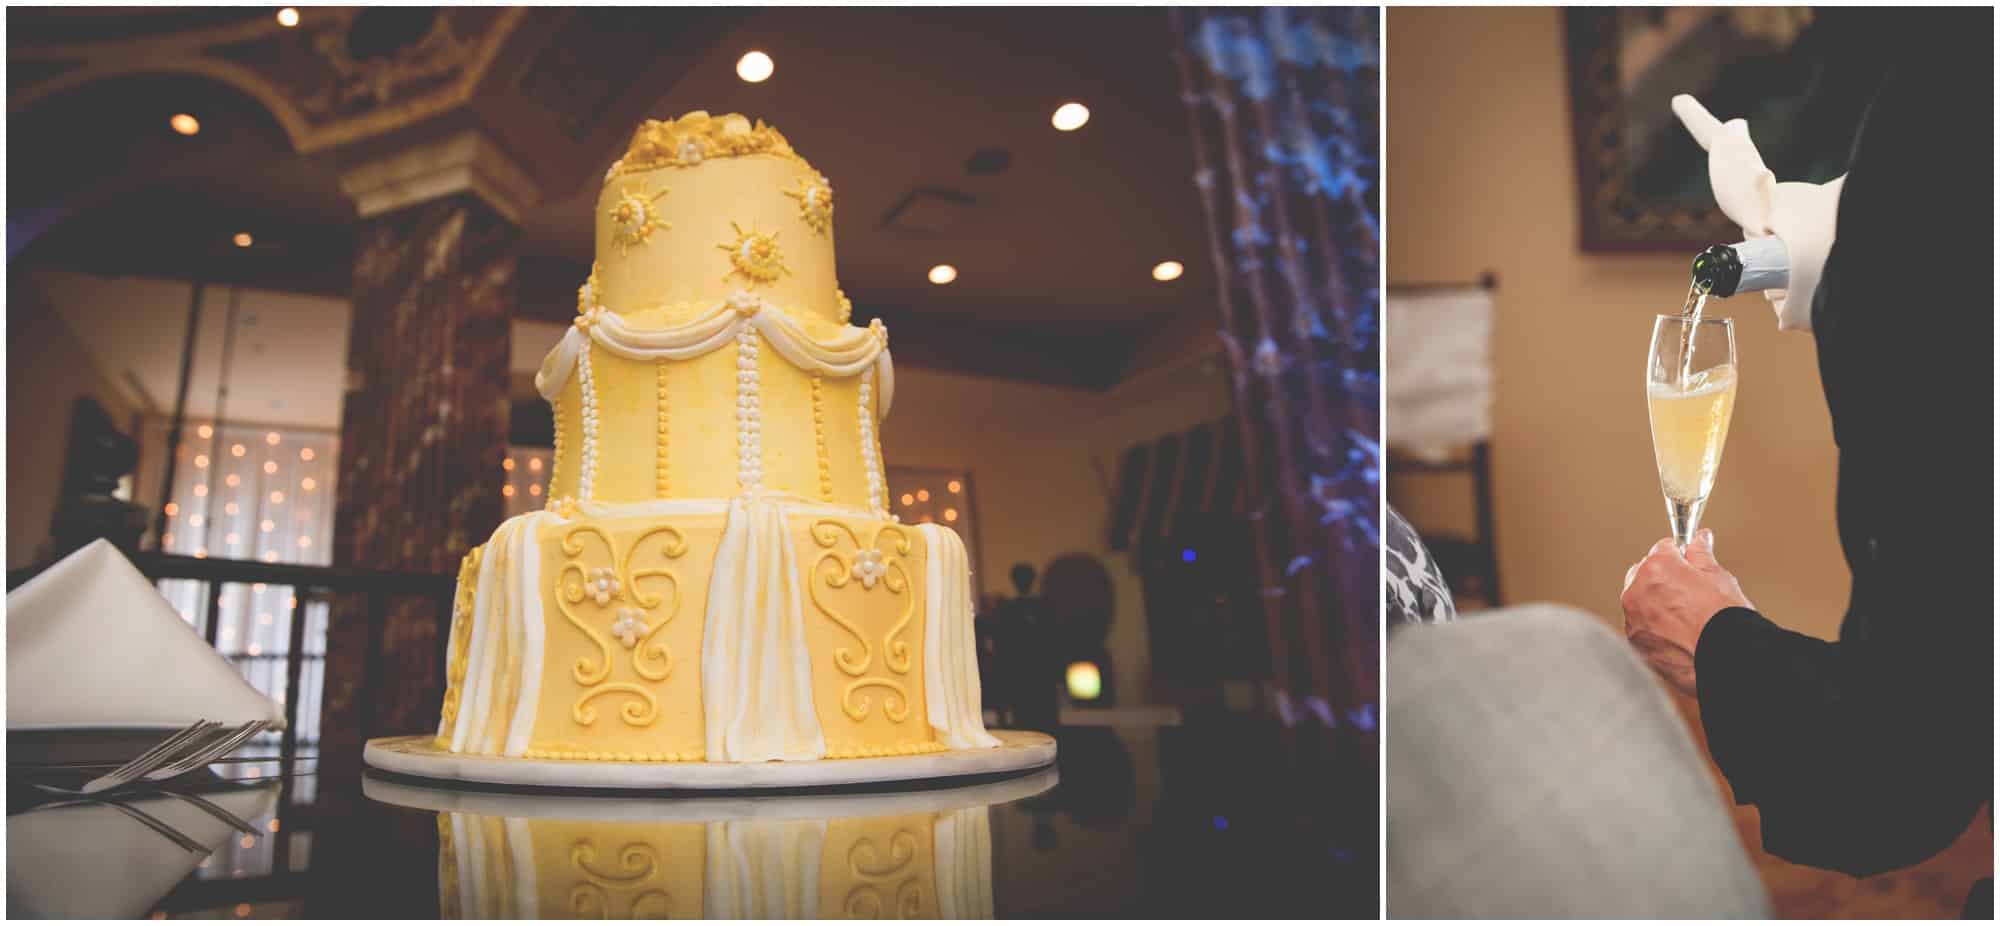 details of cake at Aquaviva winery wedding